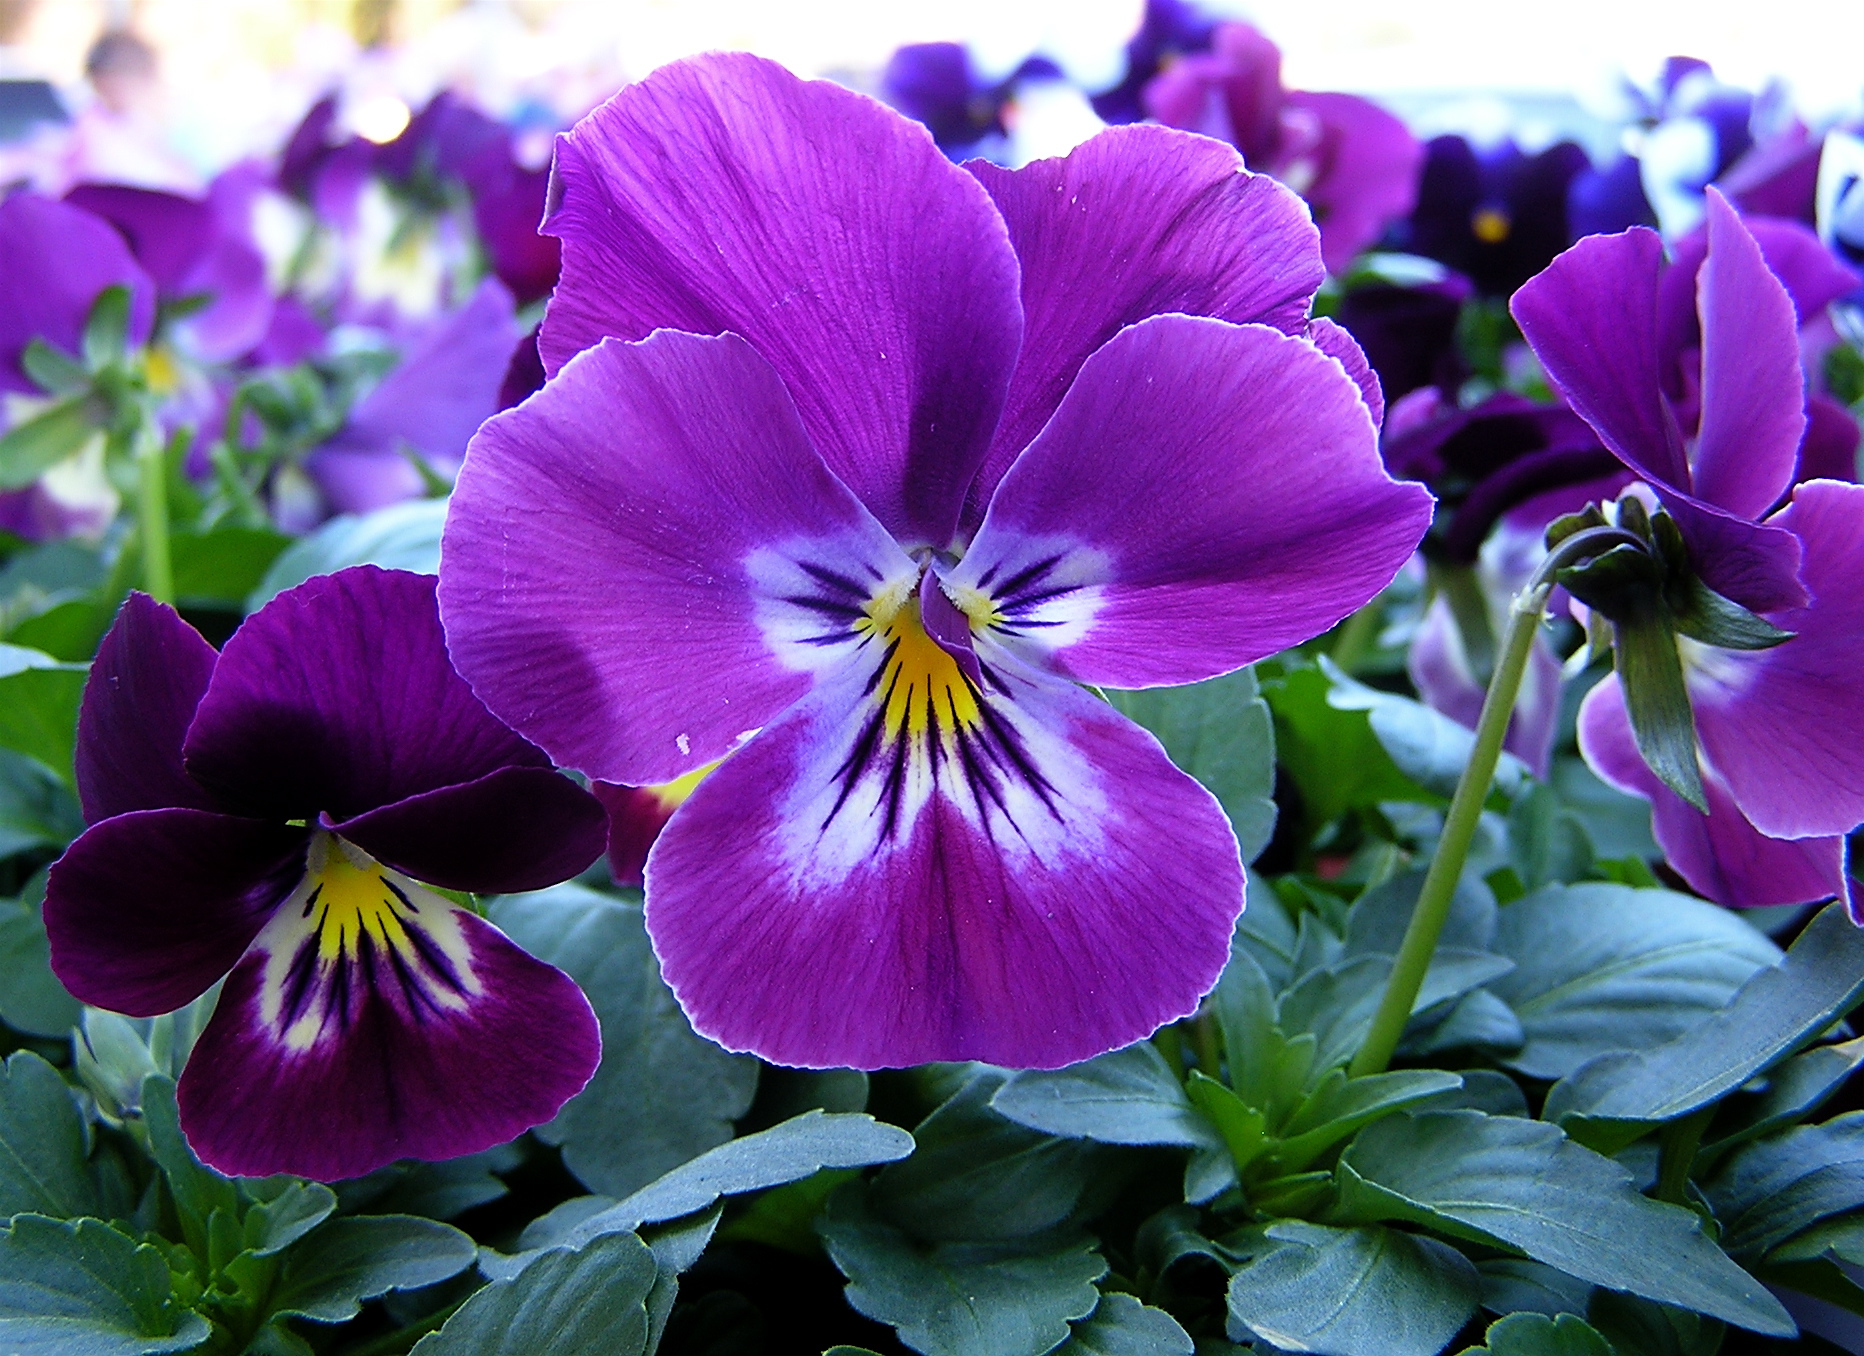 File:Purple pansy.jpg - Wikimedia Commons